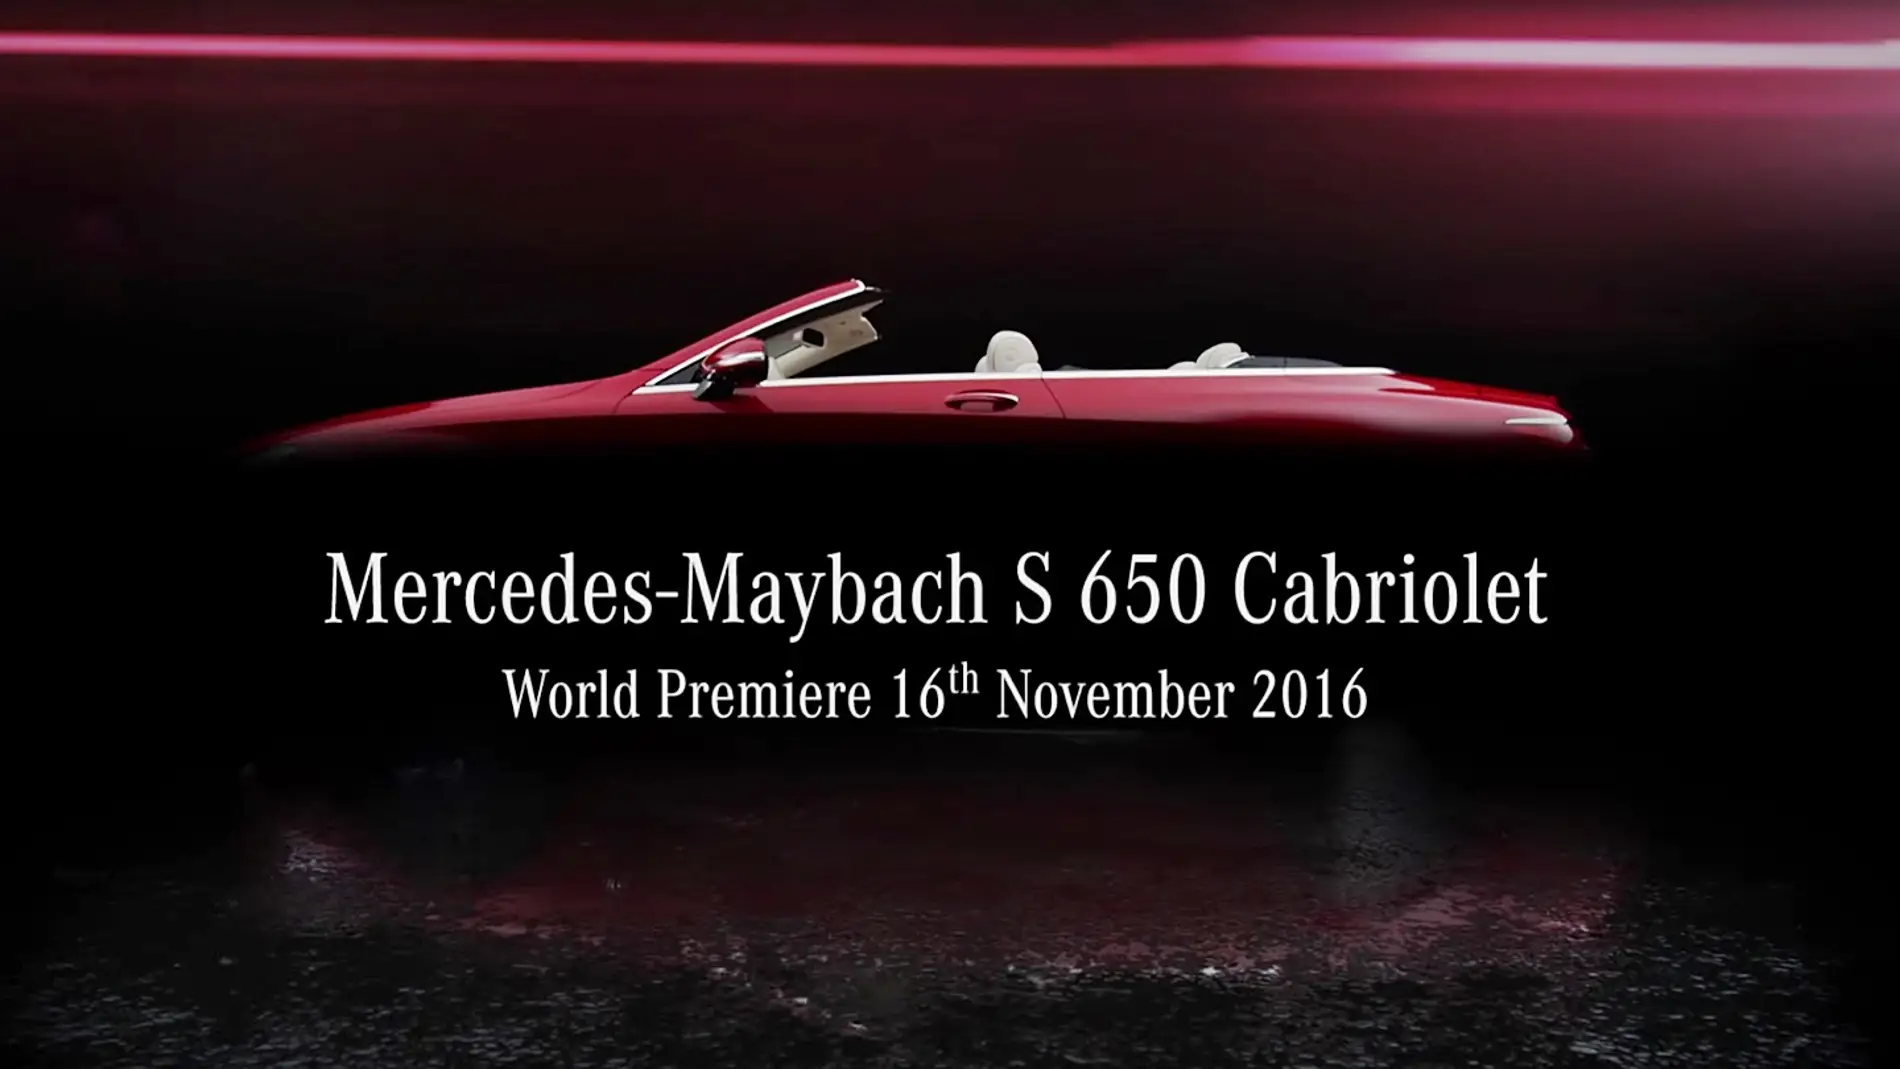 Mercedes-Maybach-S650-Cabriolet-dm-2016-01.jpg